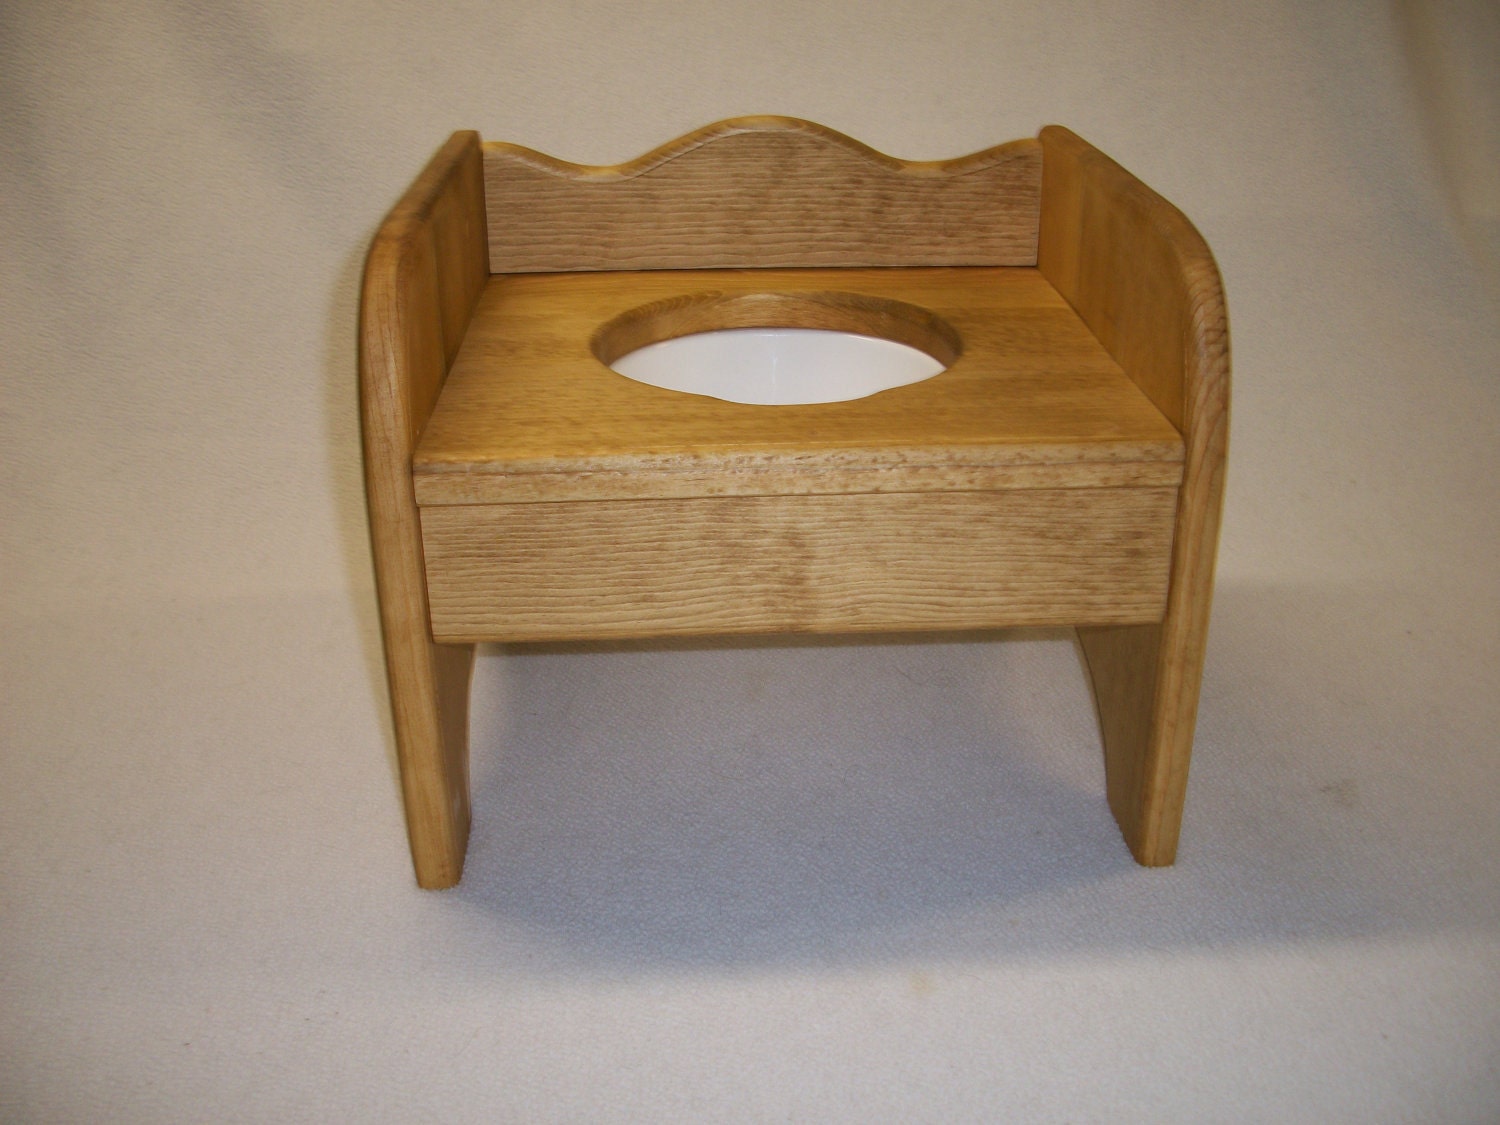 The Little Denver Wooden Potty Chair Etsy